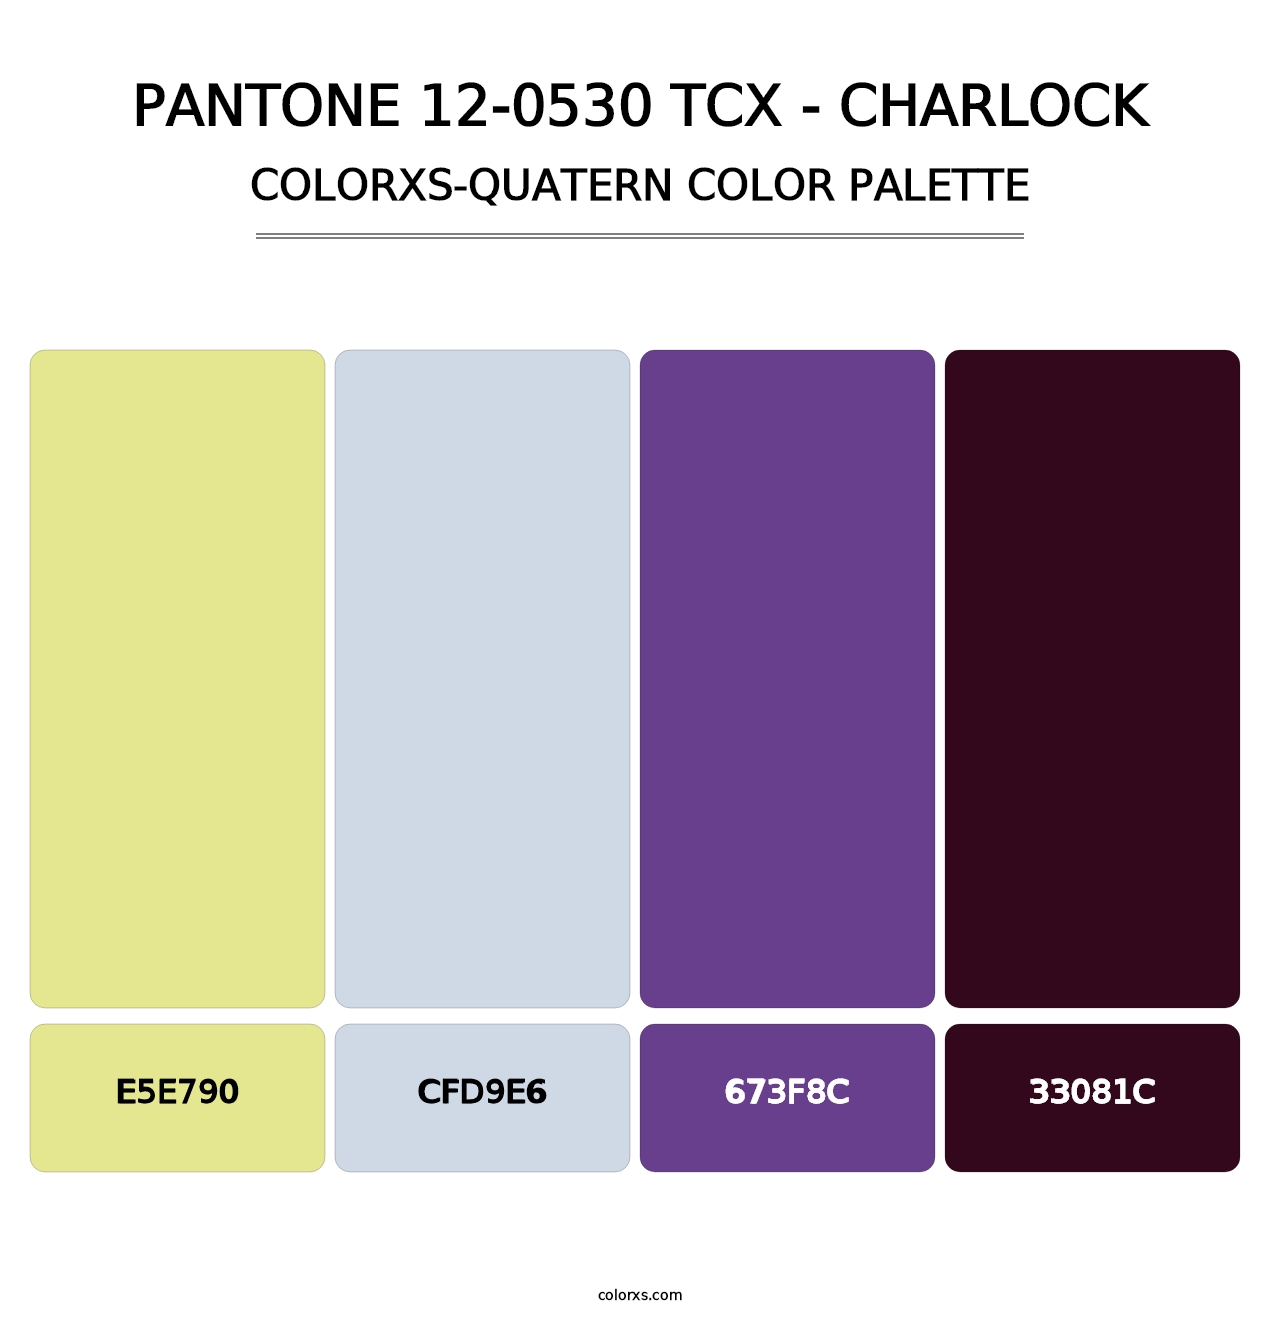 PANTONE 12-0530 TCX - Charlock - Colorxs Quatern Palette